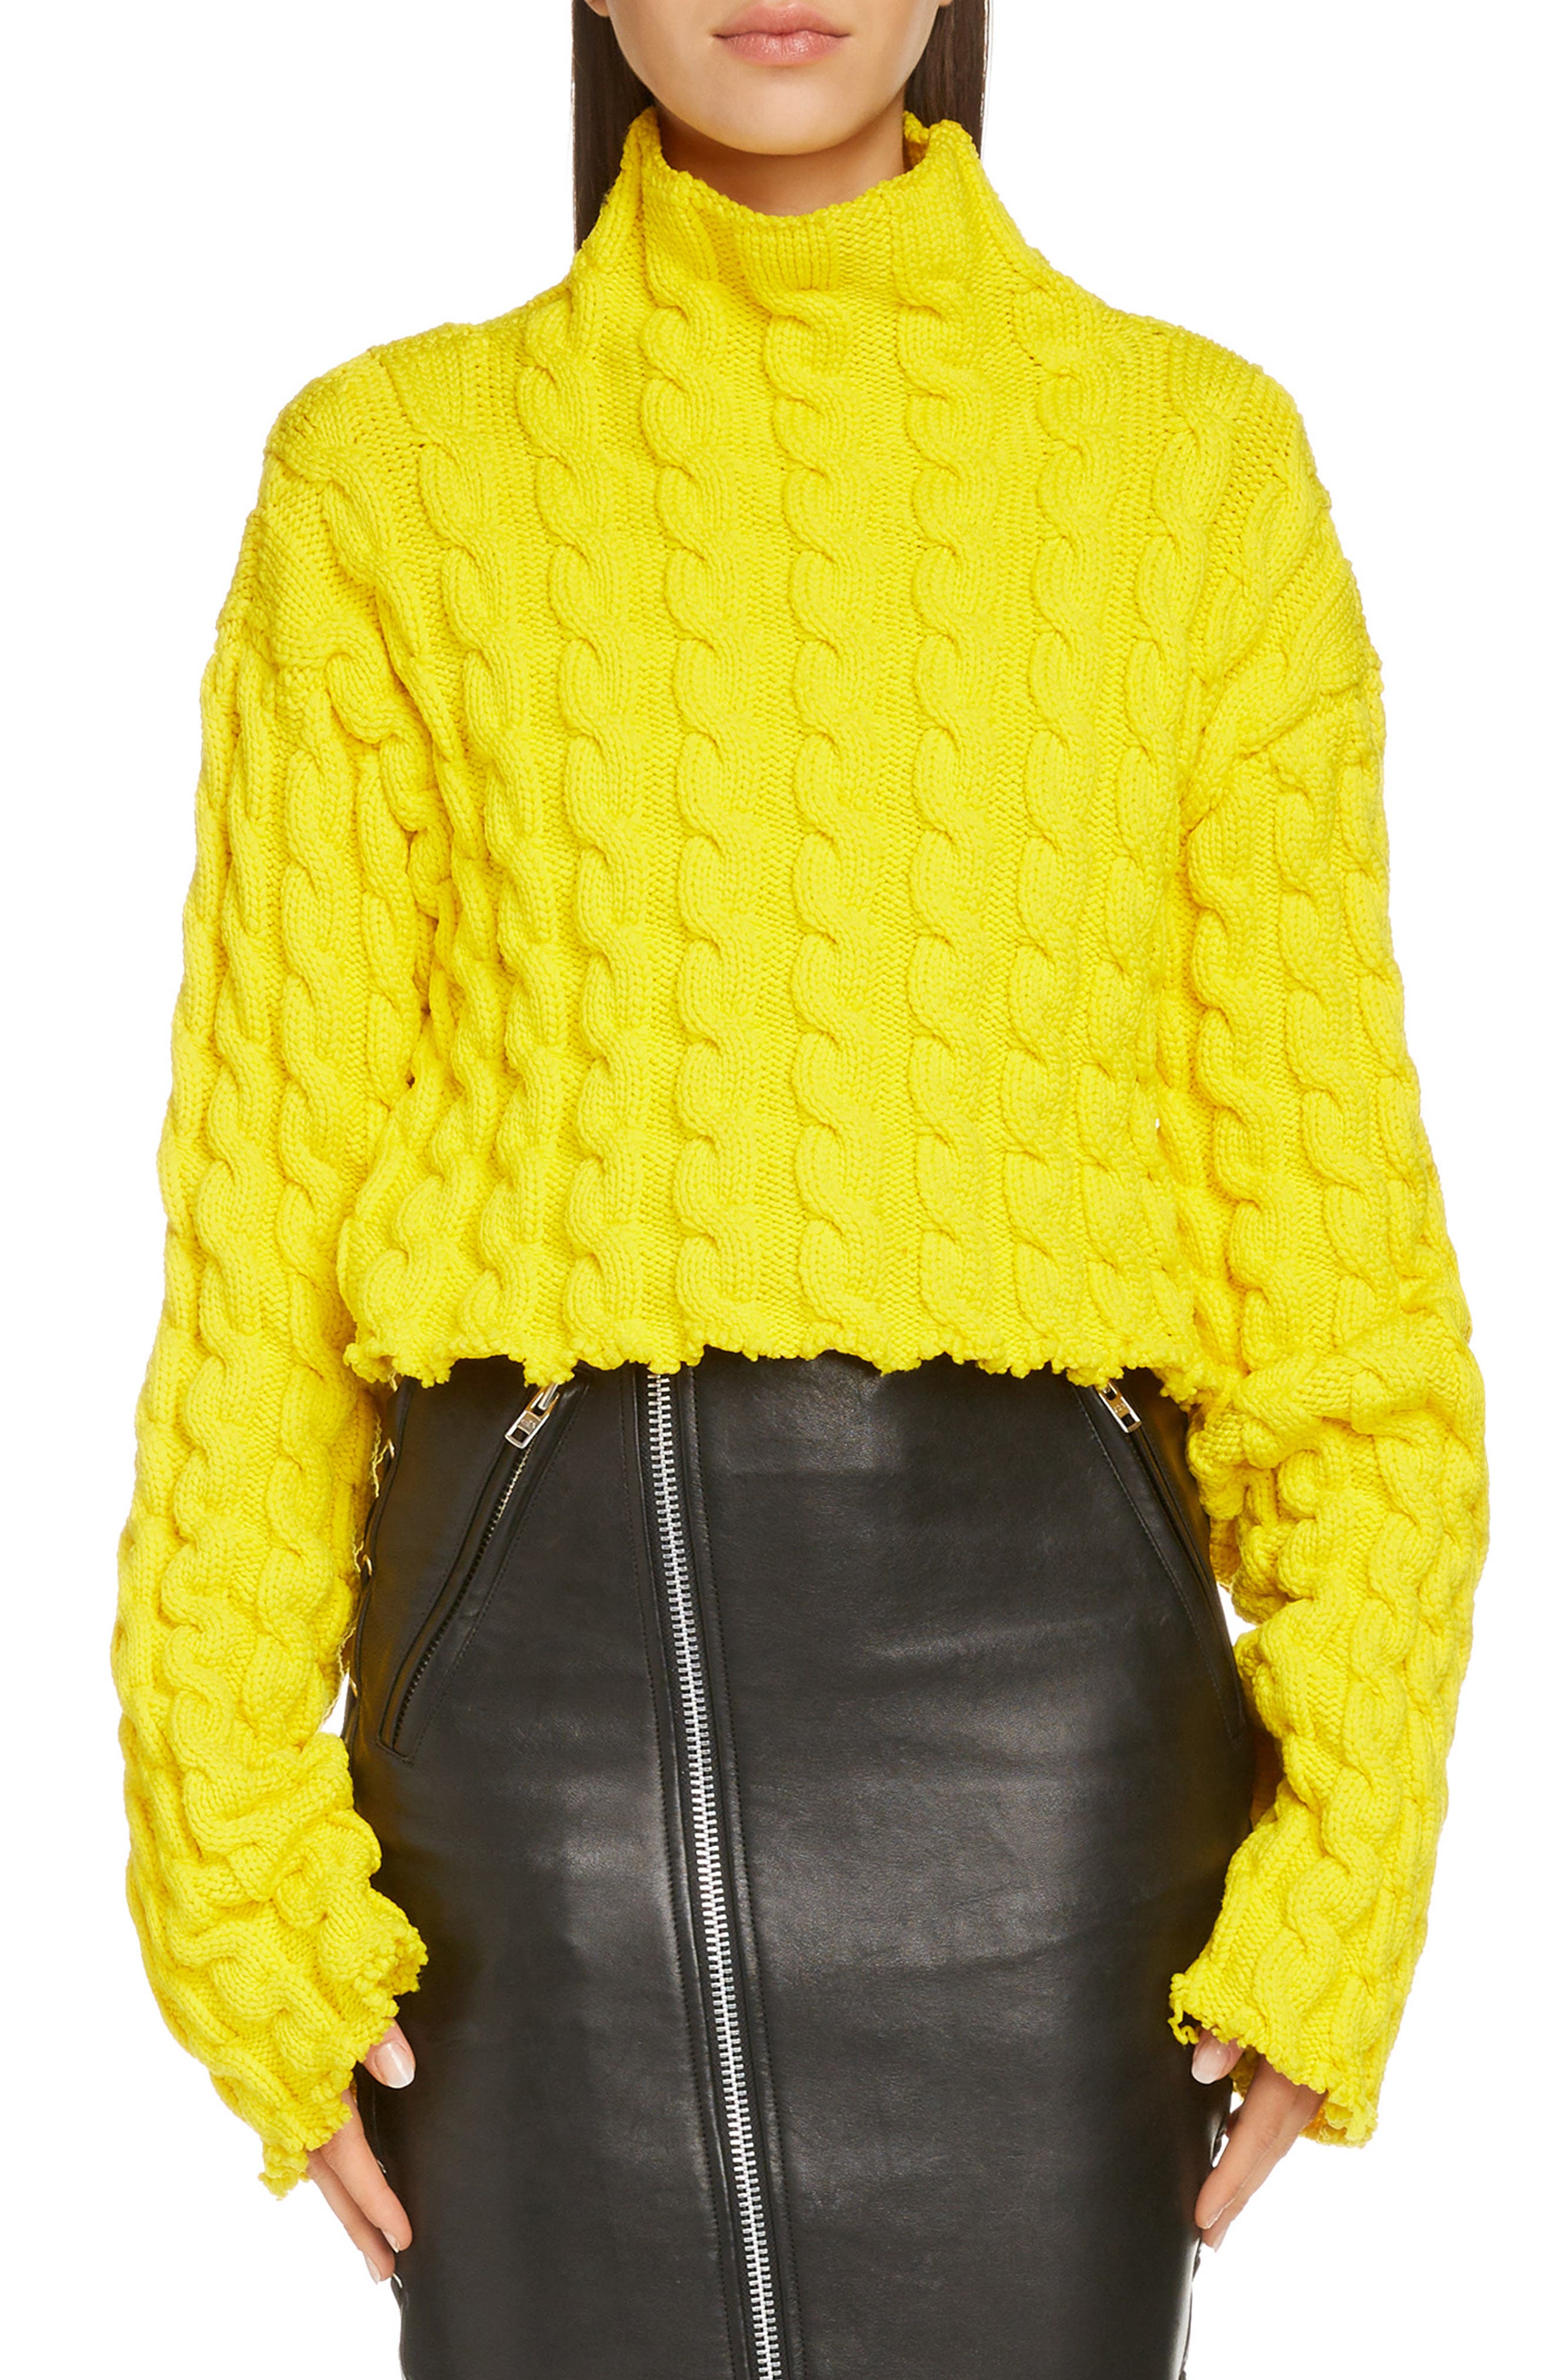 balenciaga sweater womens yellow